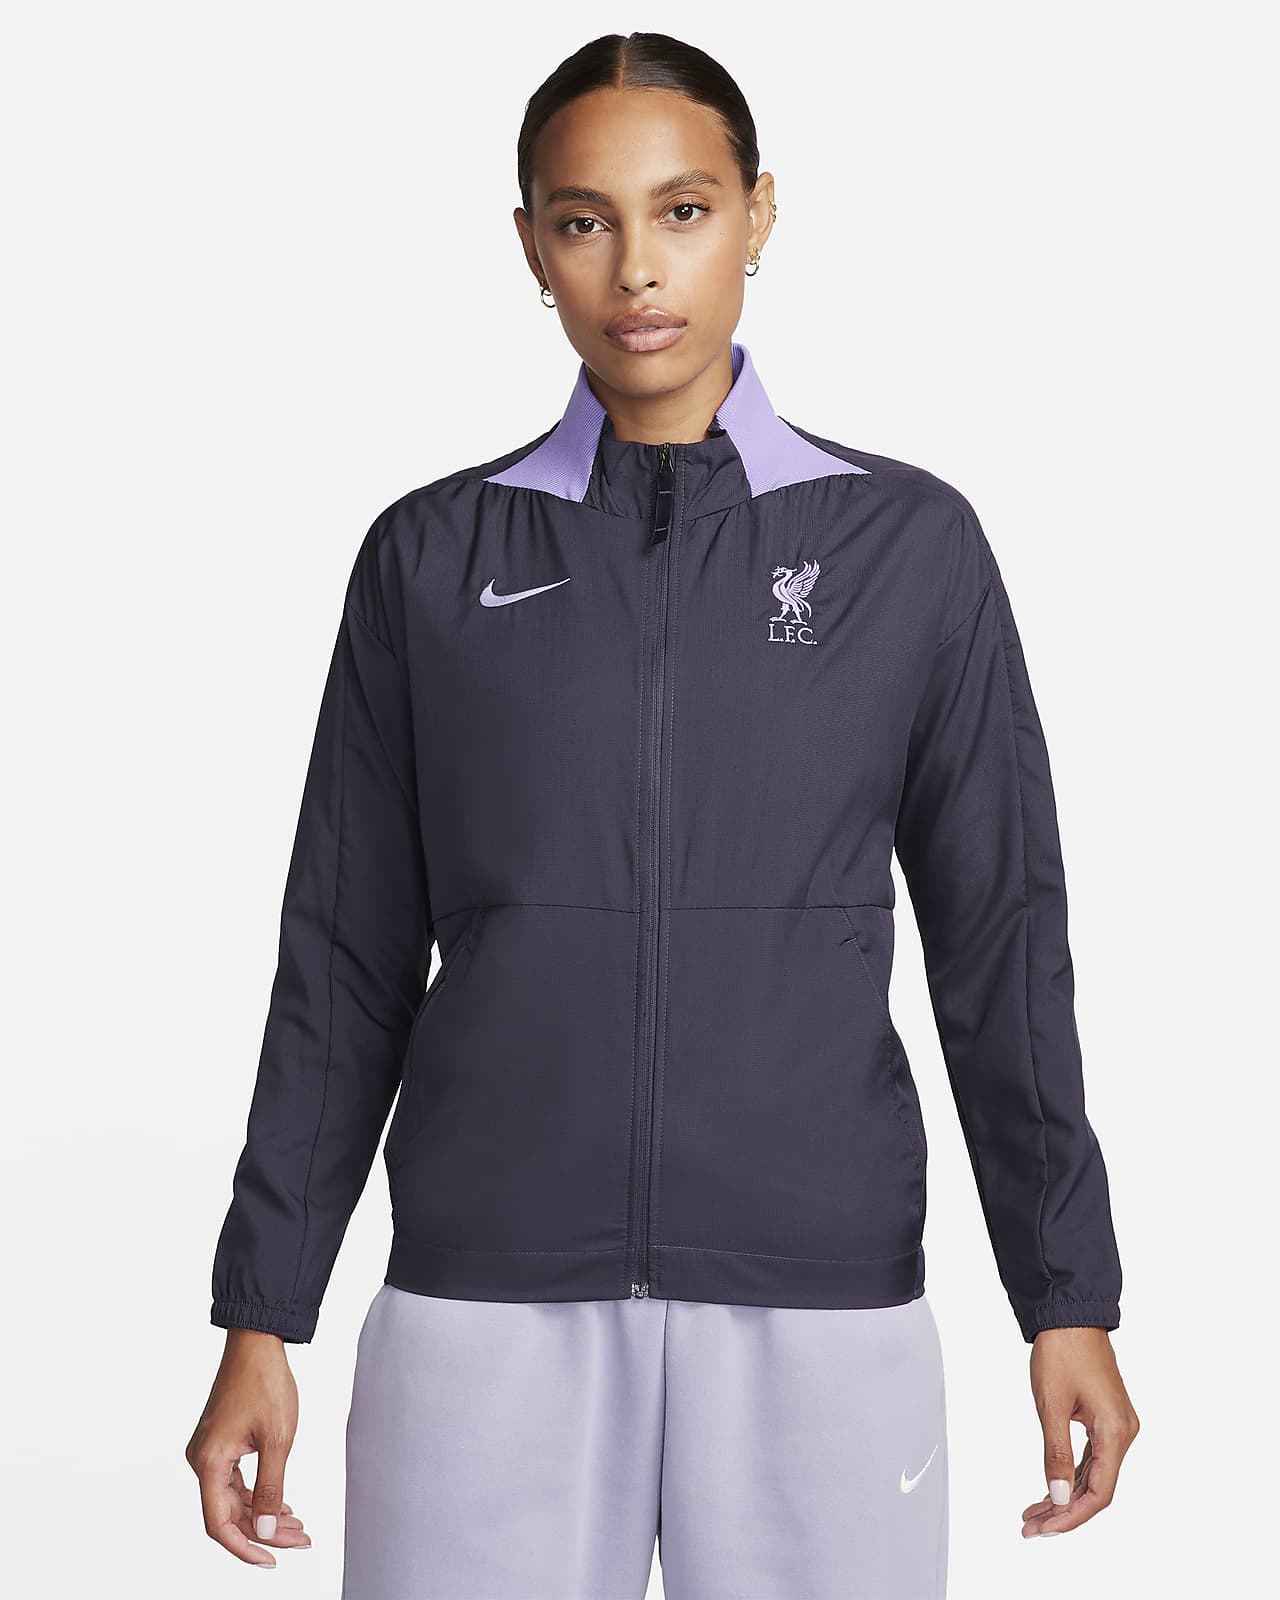 L, Jackets, Womens sports clothing, Sports & leisure, Nike